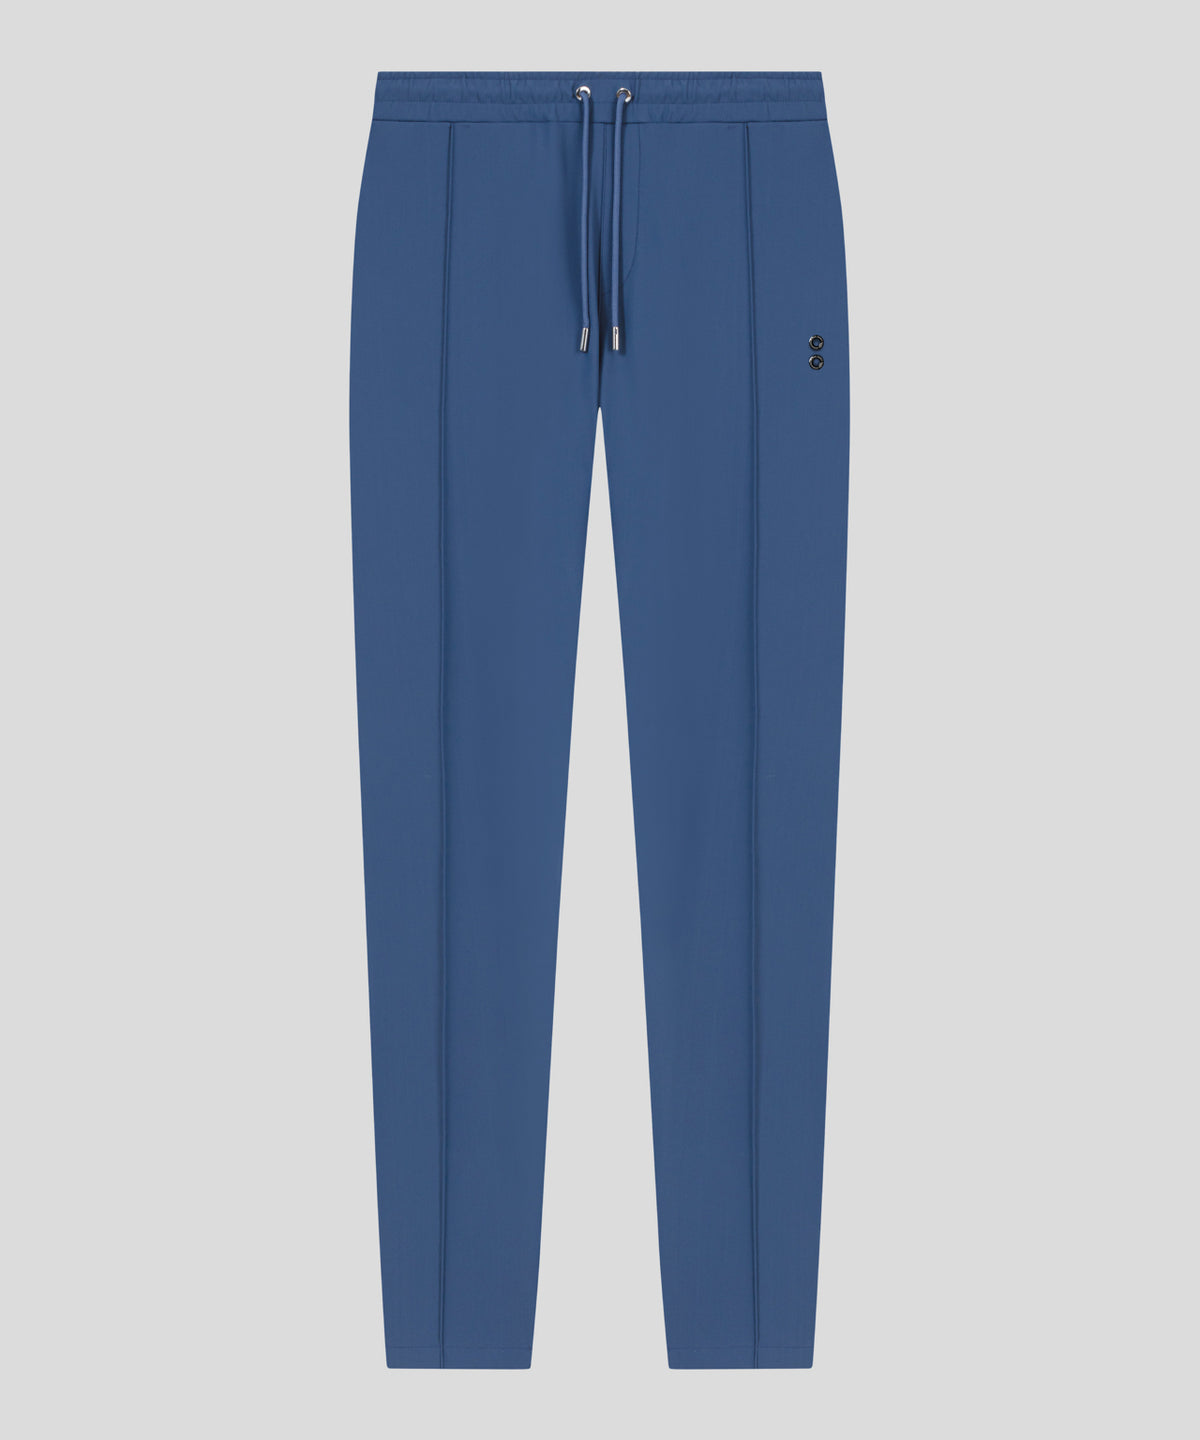 Pantalon coupe droite en tissu stretch: Bleu gris foncé